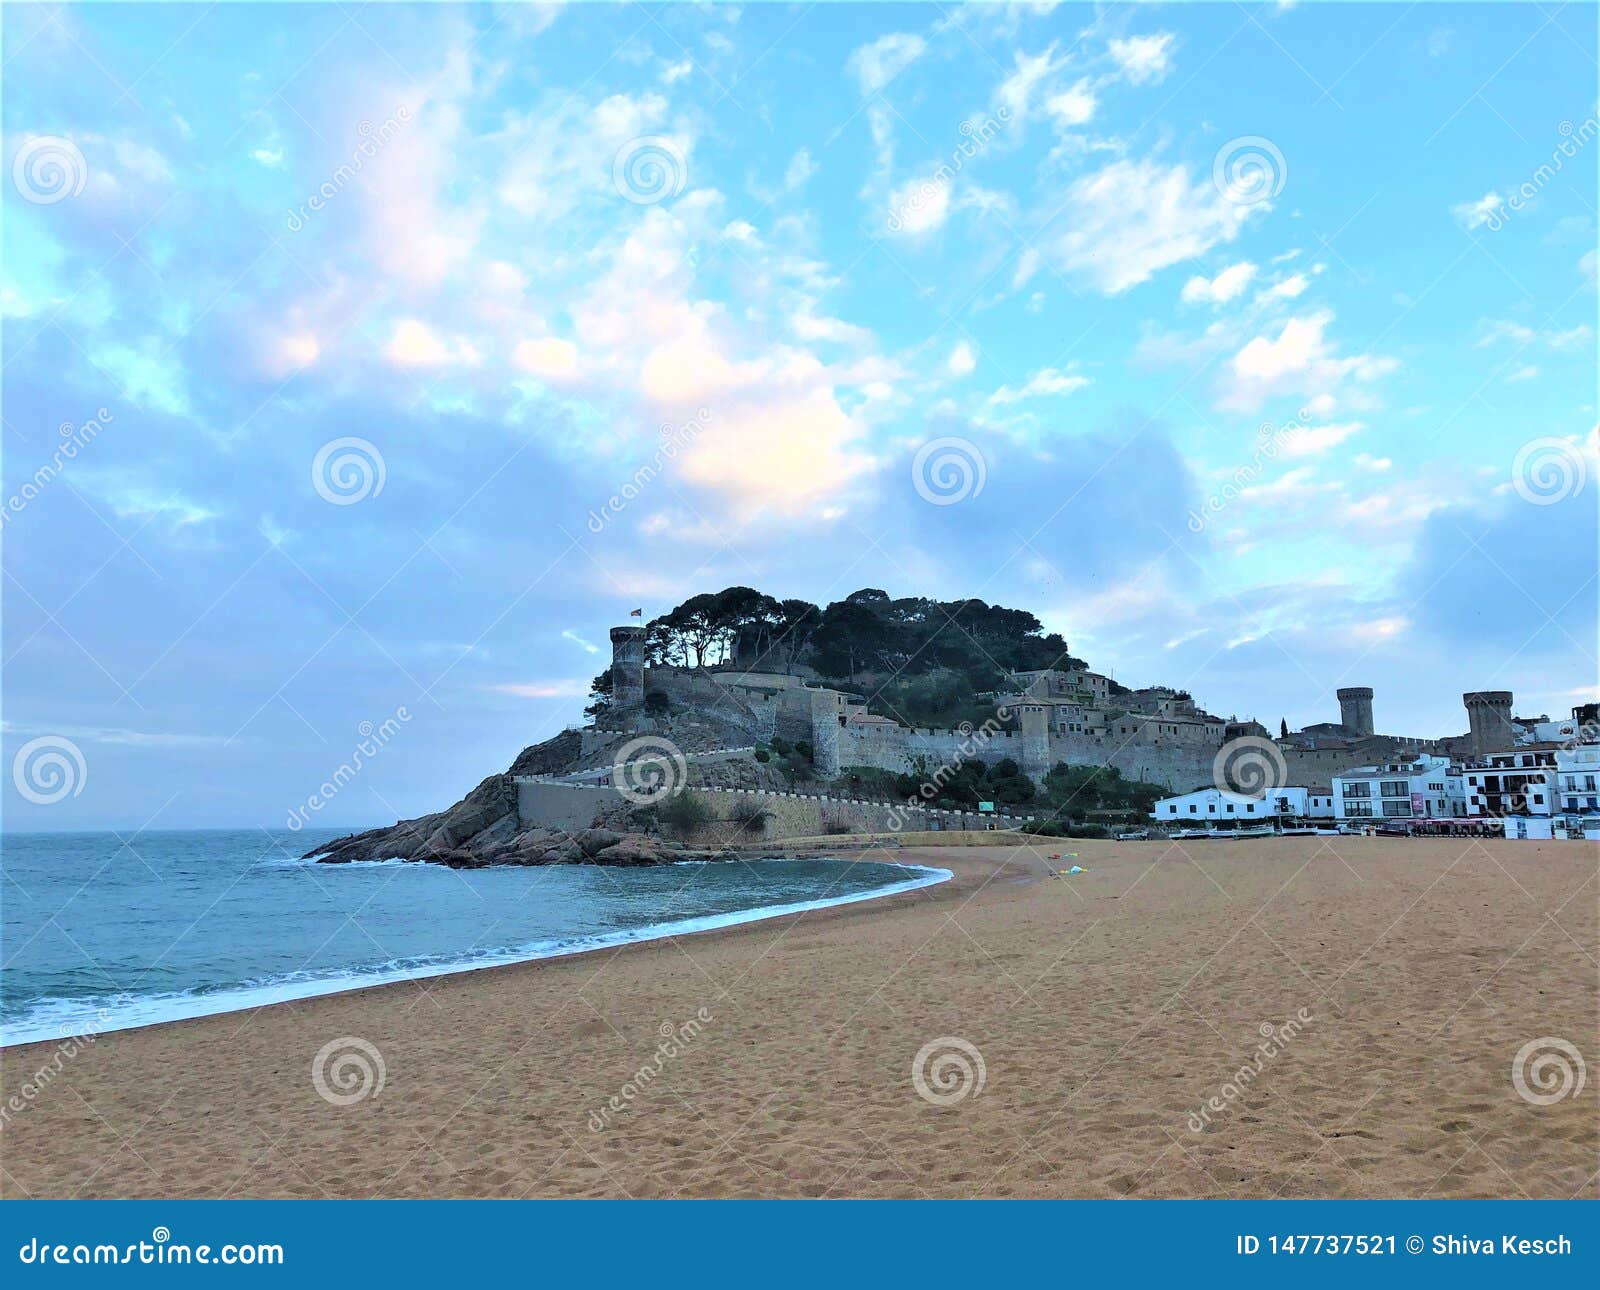 tossa de mar, spain. sea, medieval fortification, seaside and fairytale